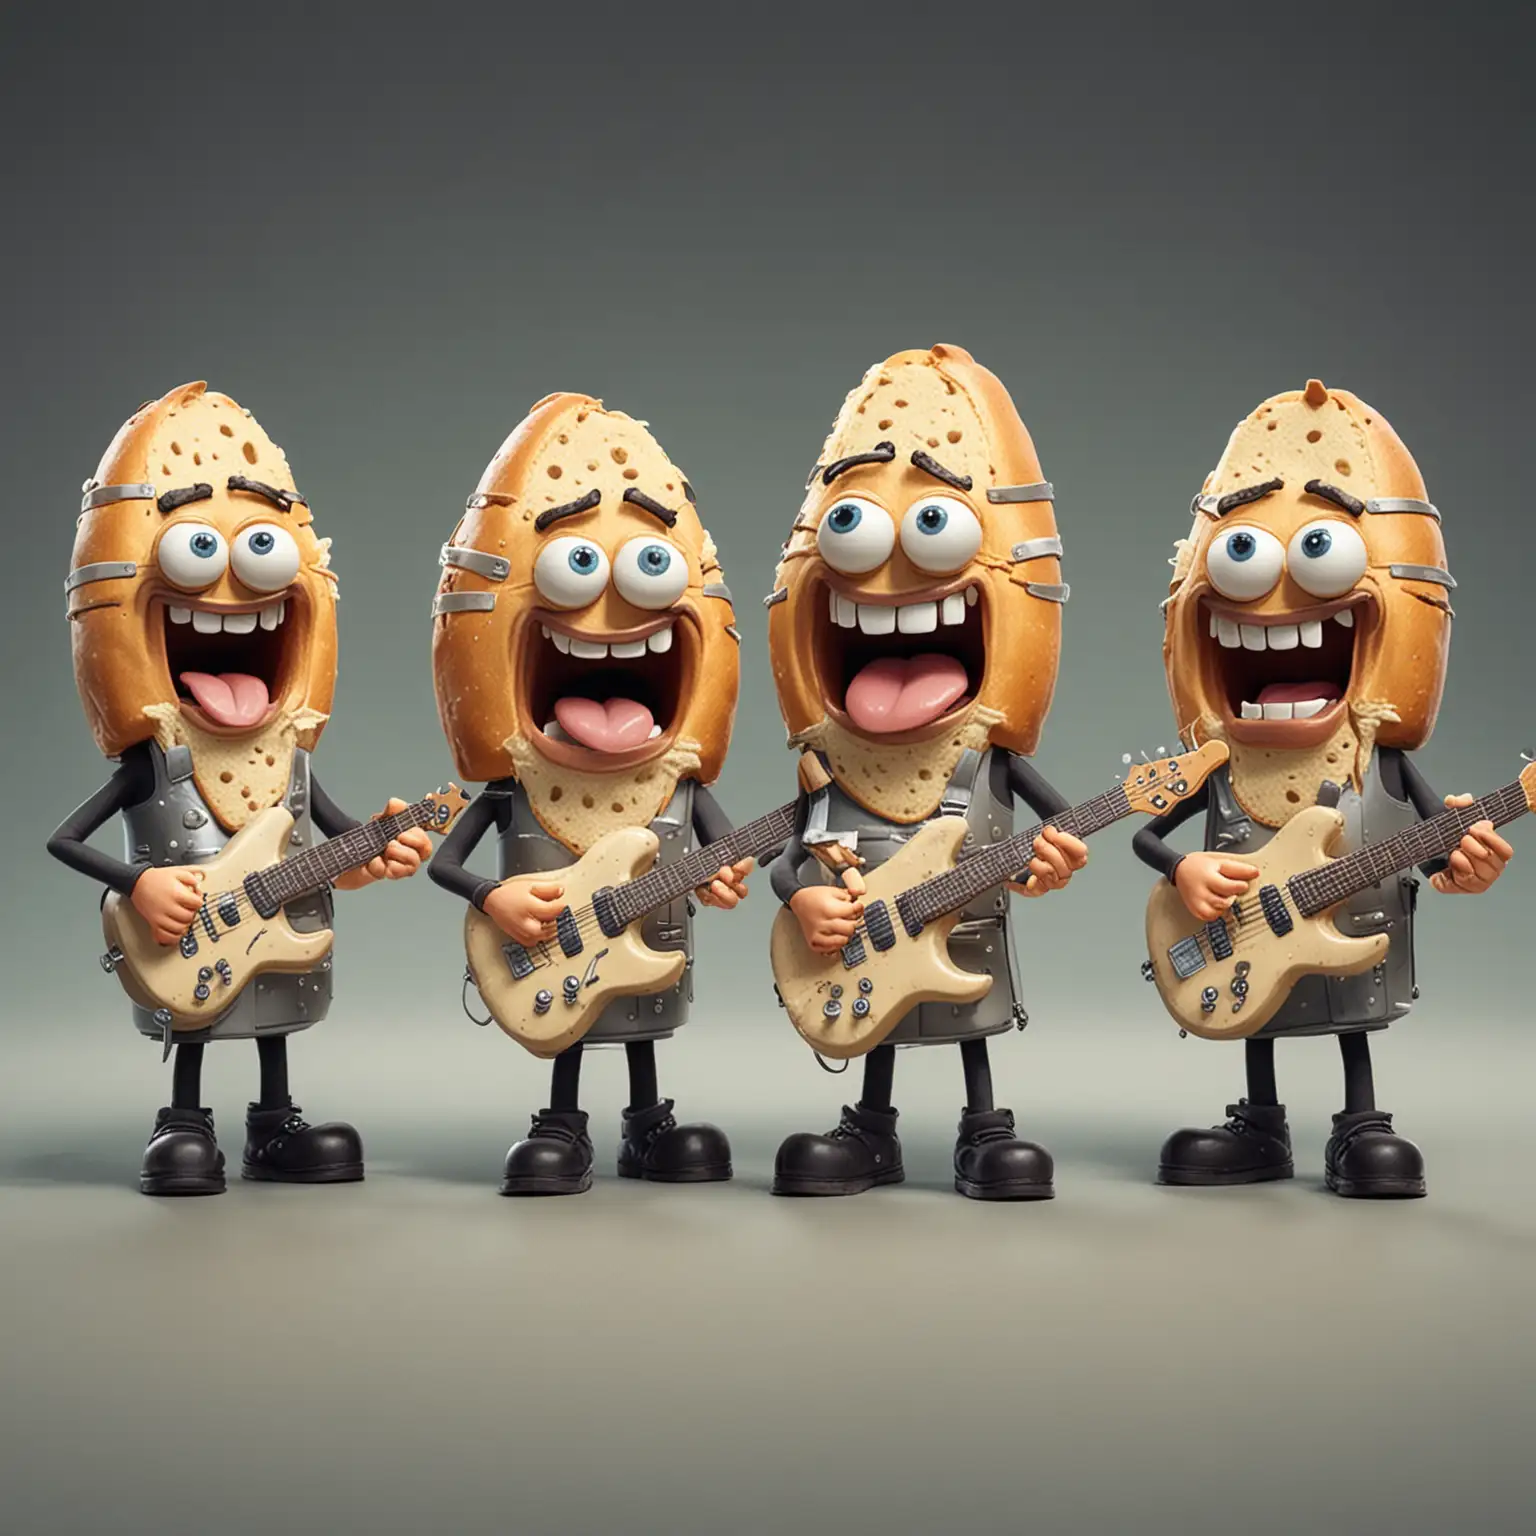 metal band made of ciabattas, cartoon style
